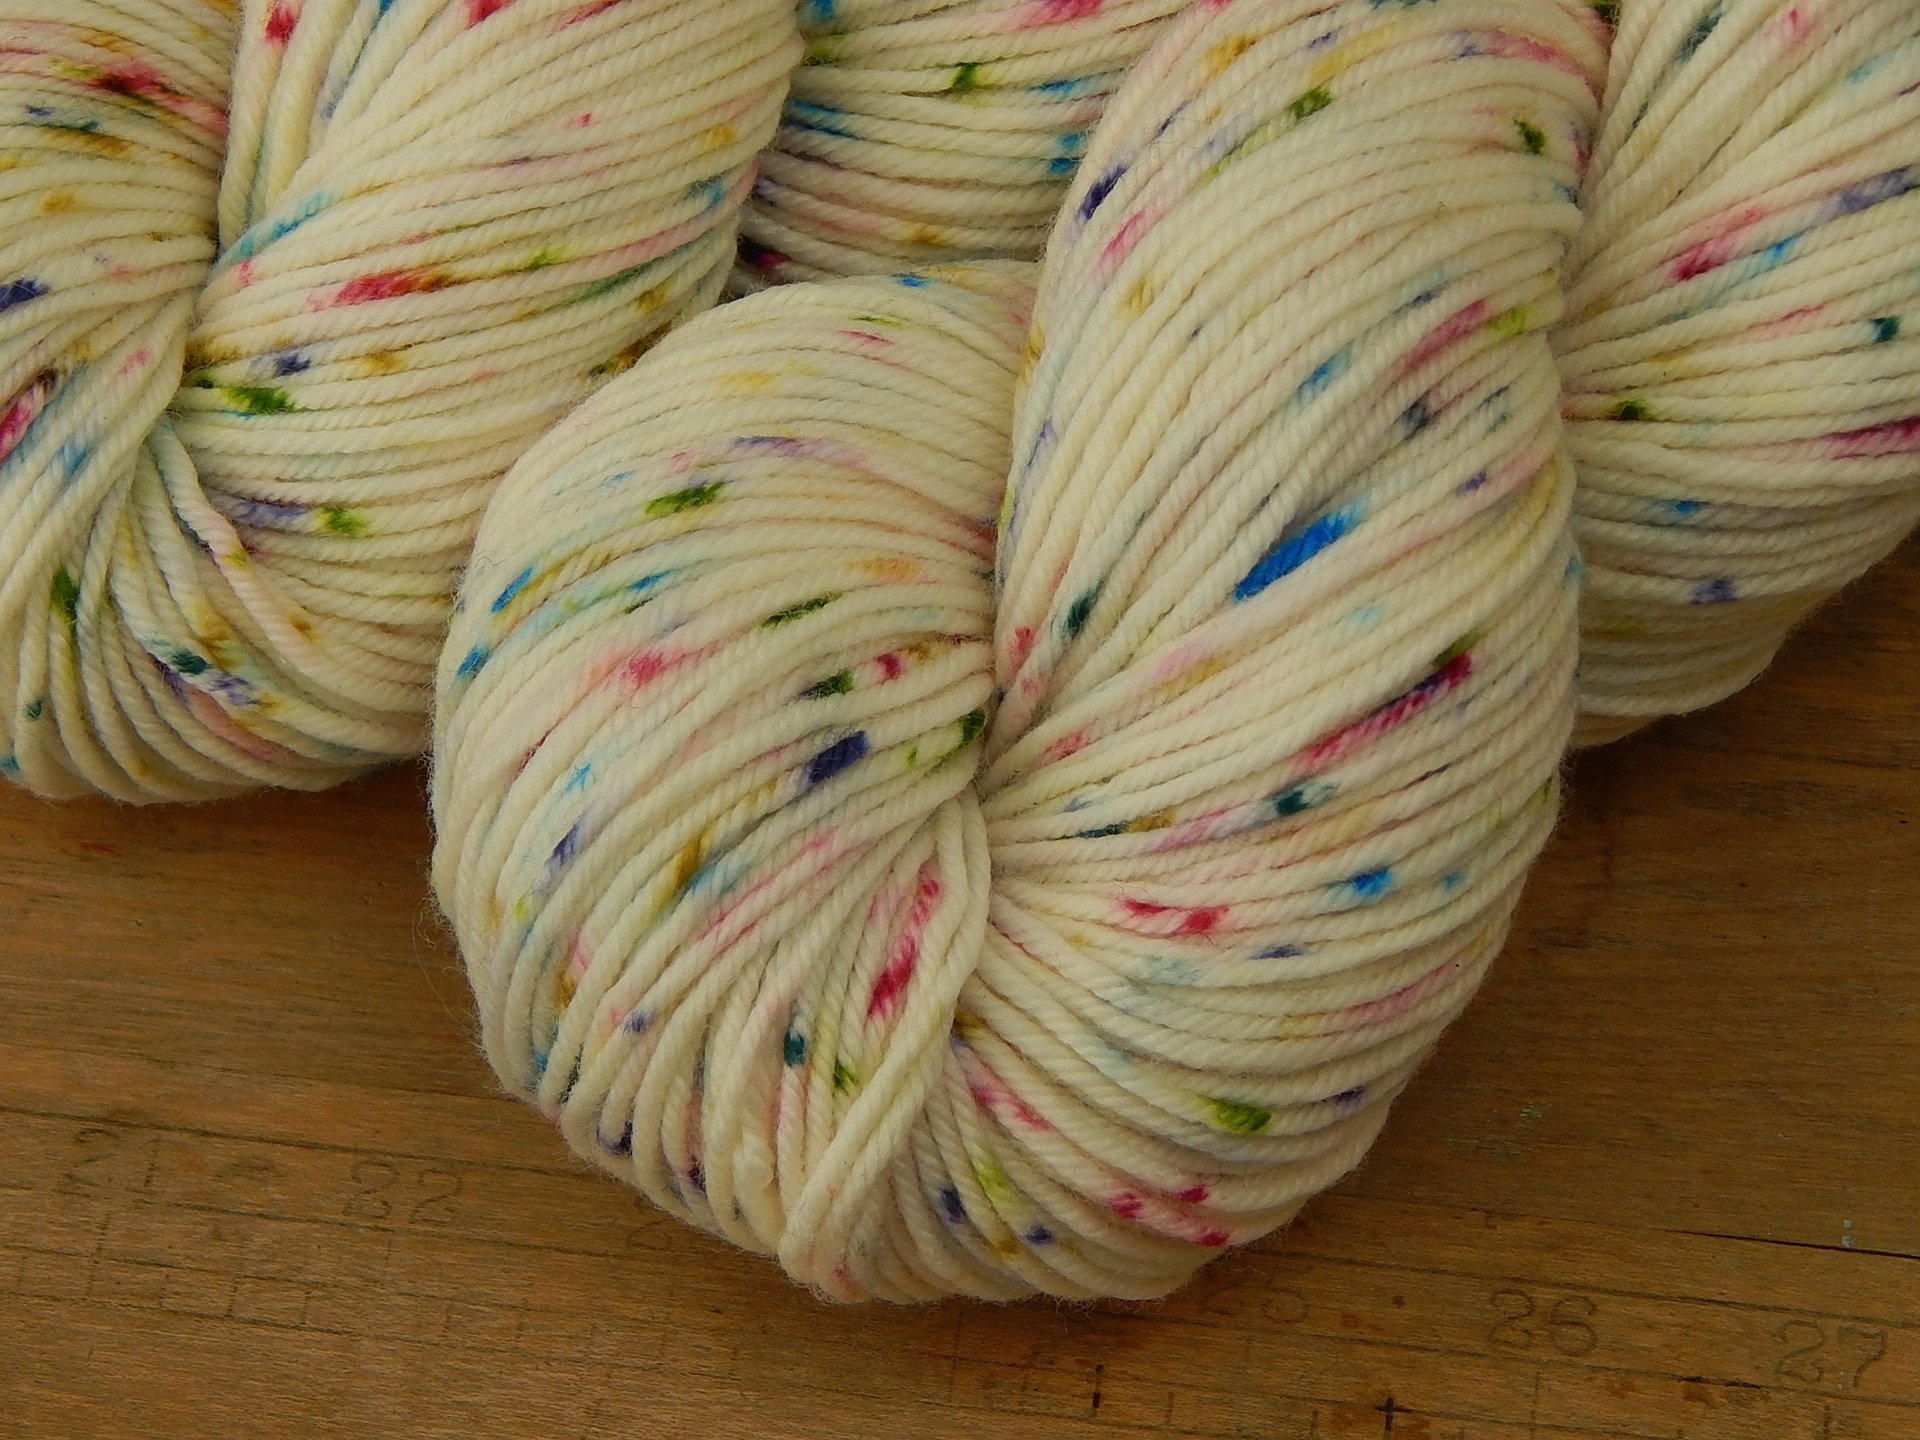 Hand Dyed Yarn, DK Weight Superwash Merino Wool - Potluck Confetti - Cream Off White Rainbow Speckled Indie Dyed Knitting Yarn